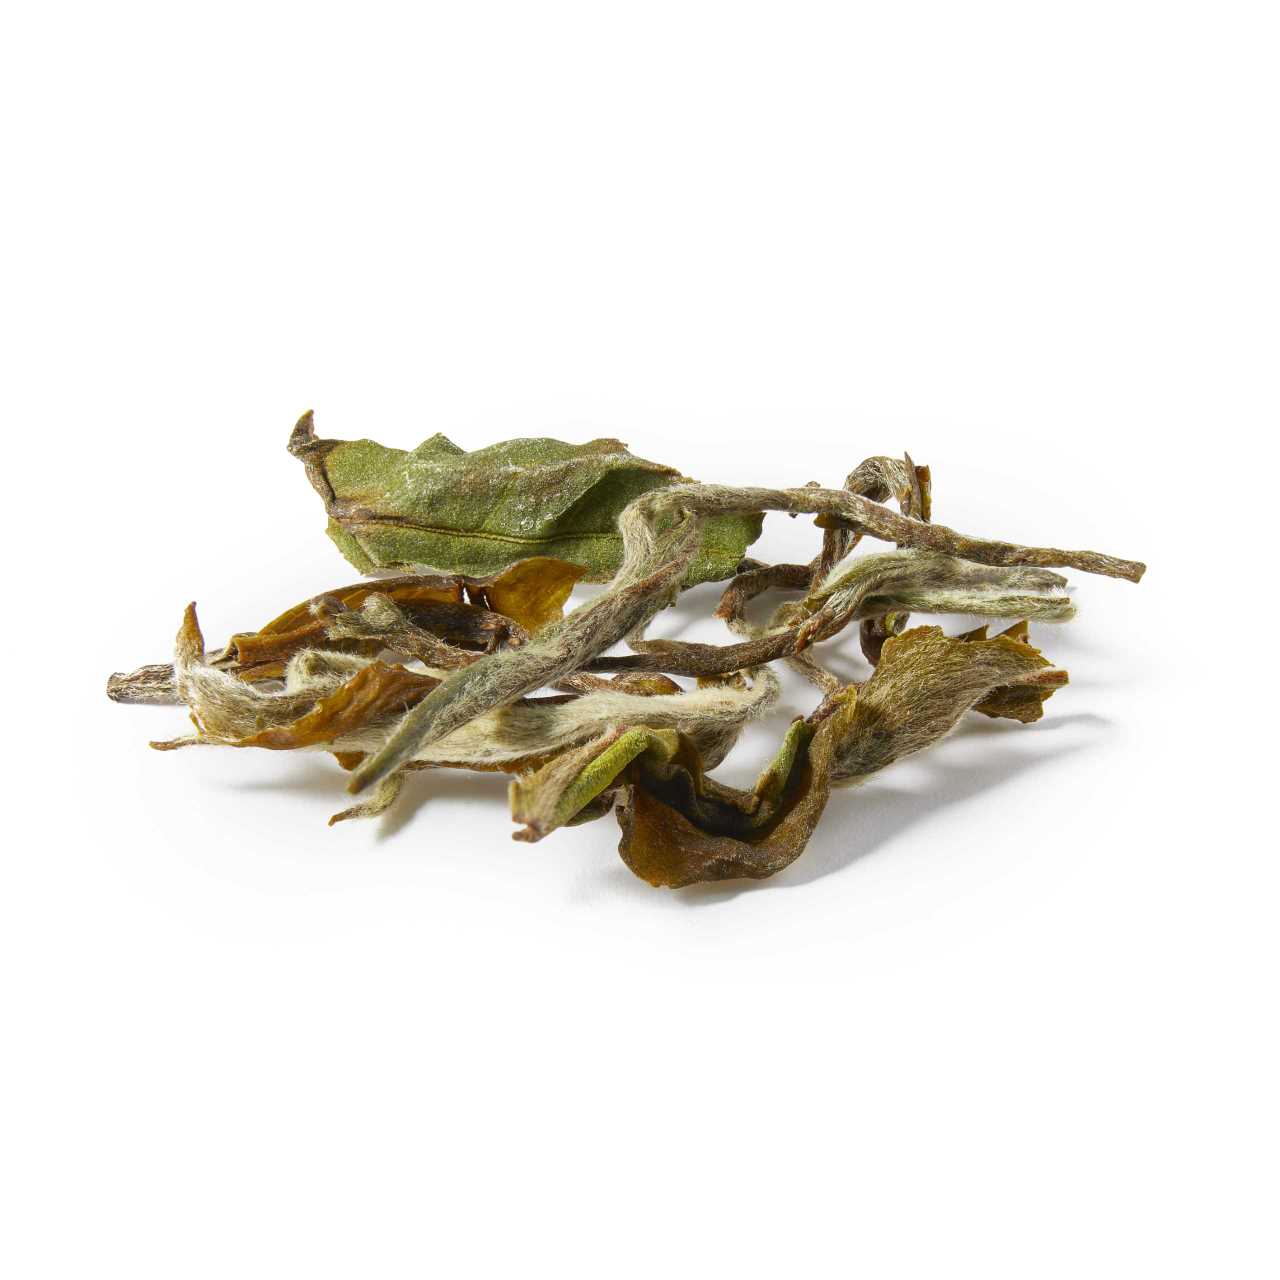 A macro pile of Glenburn White Moonshine Darjeeling First Flush Loose Leaf tea